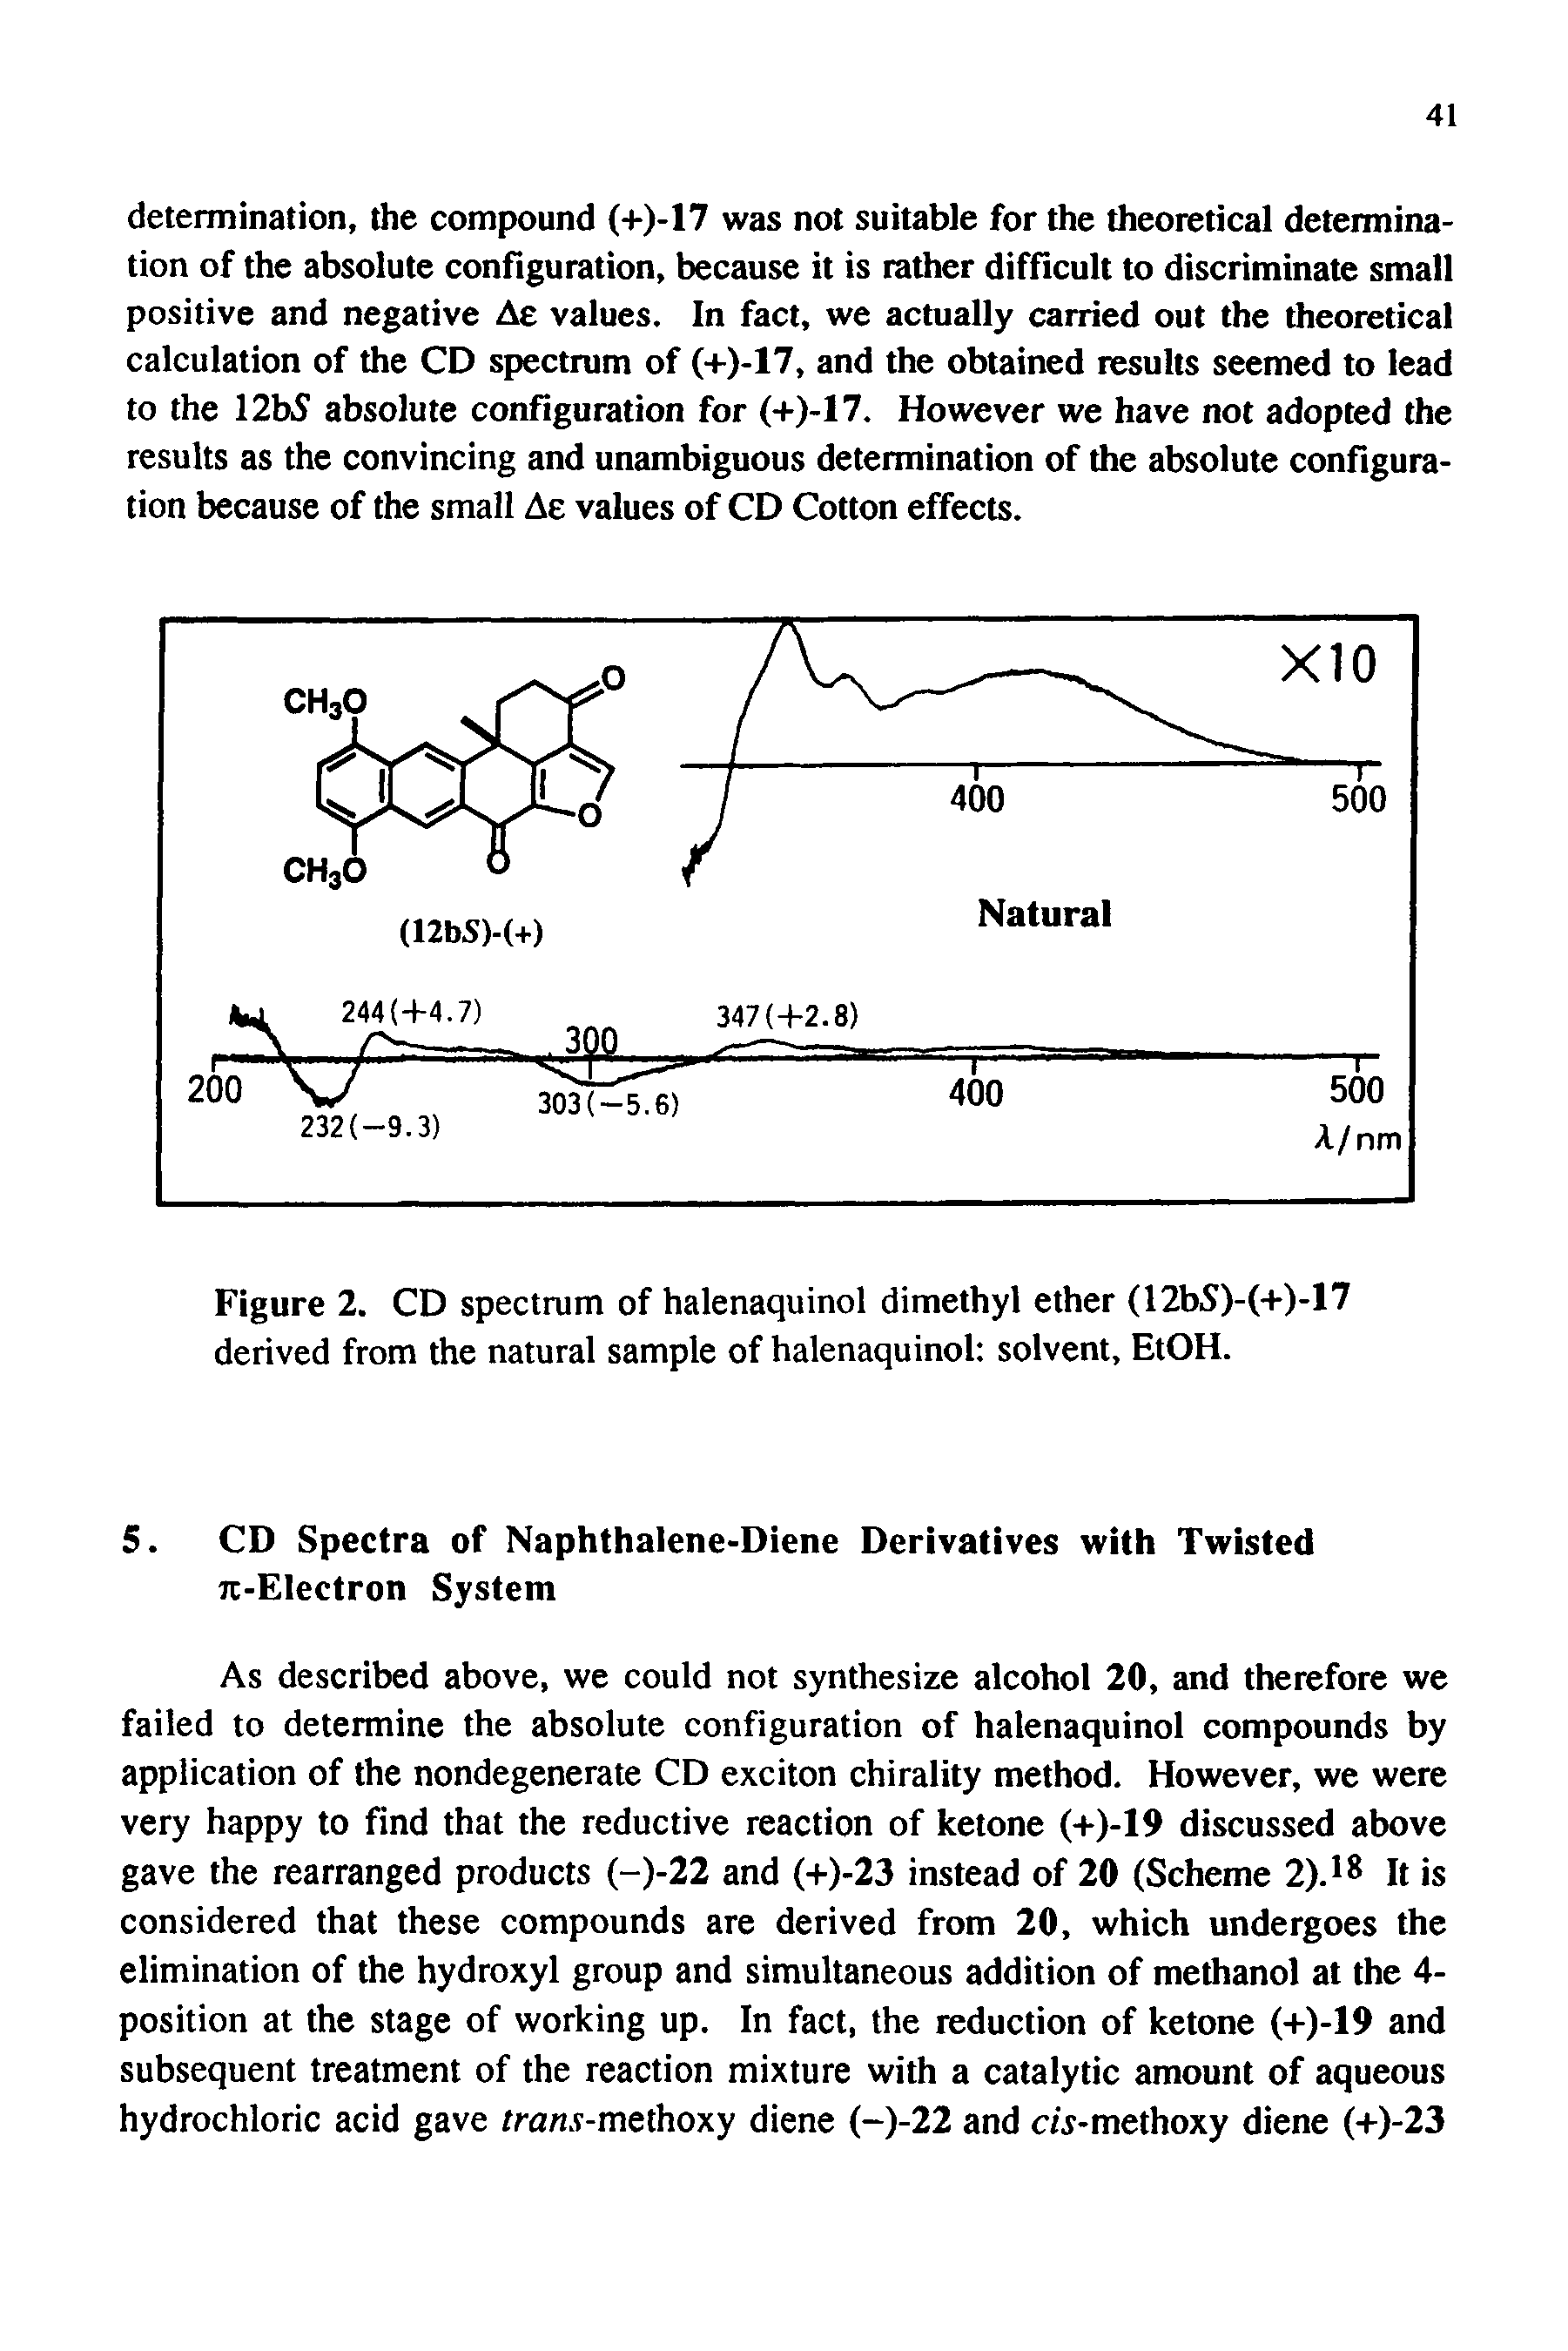 Figure 2. CD spectrum of halenaquinol dimethyl ether (12b5)-(+)-17 derived from the natural sample of halenaquinol solvent, EtOH.